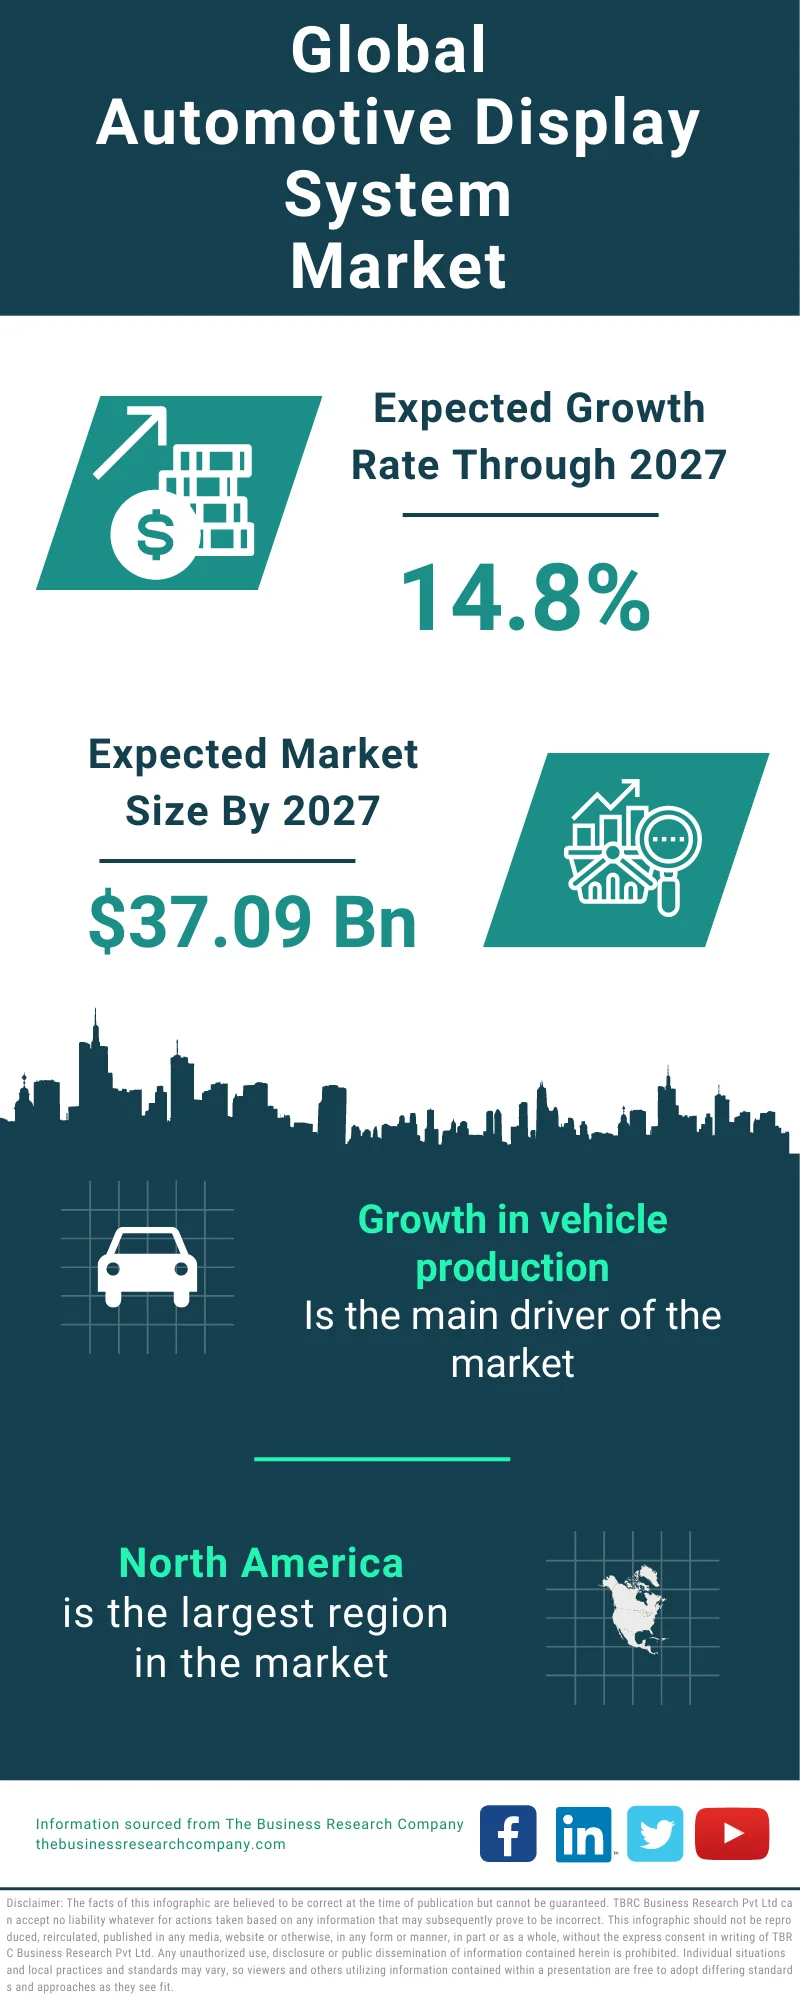 Automotive Display System Global Market Report 2023